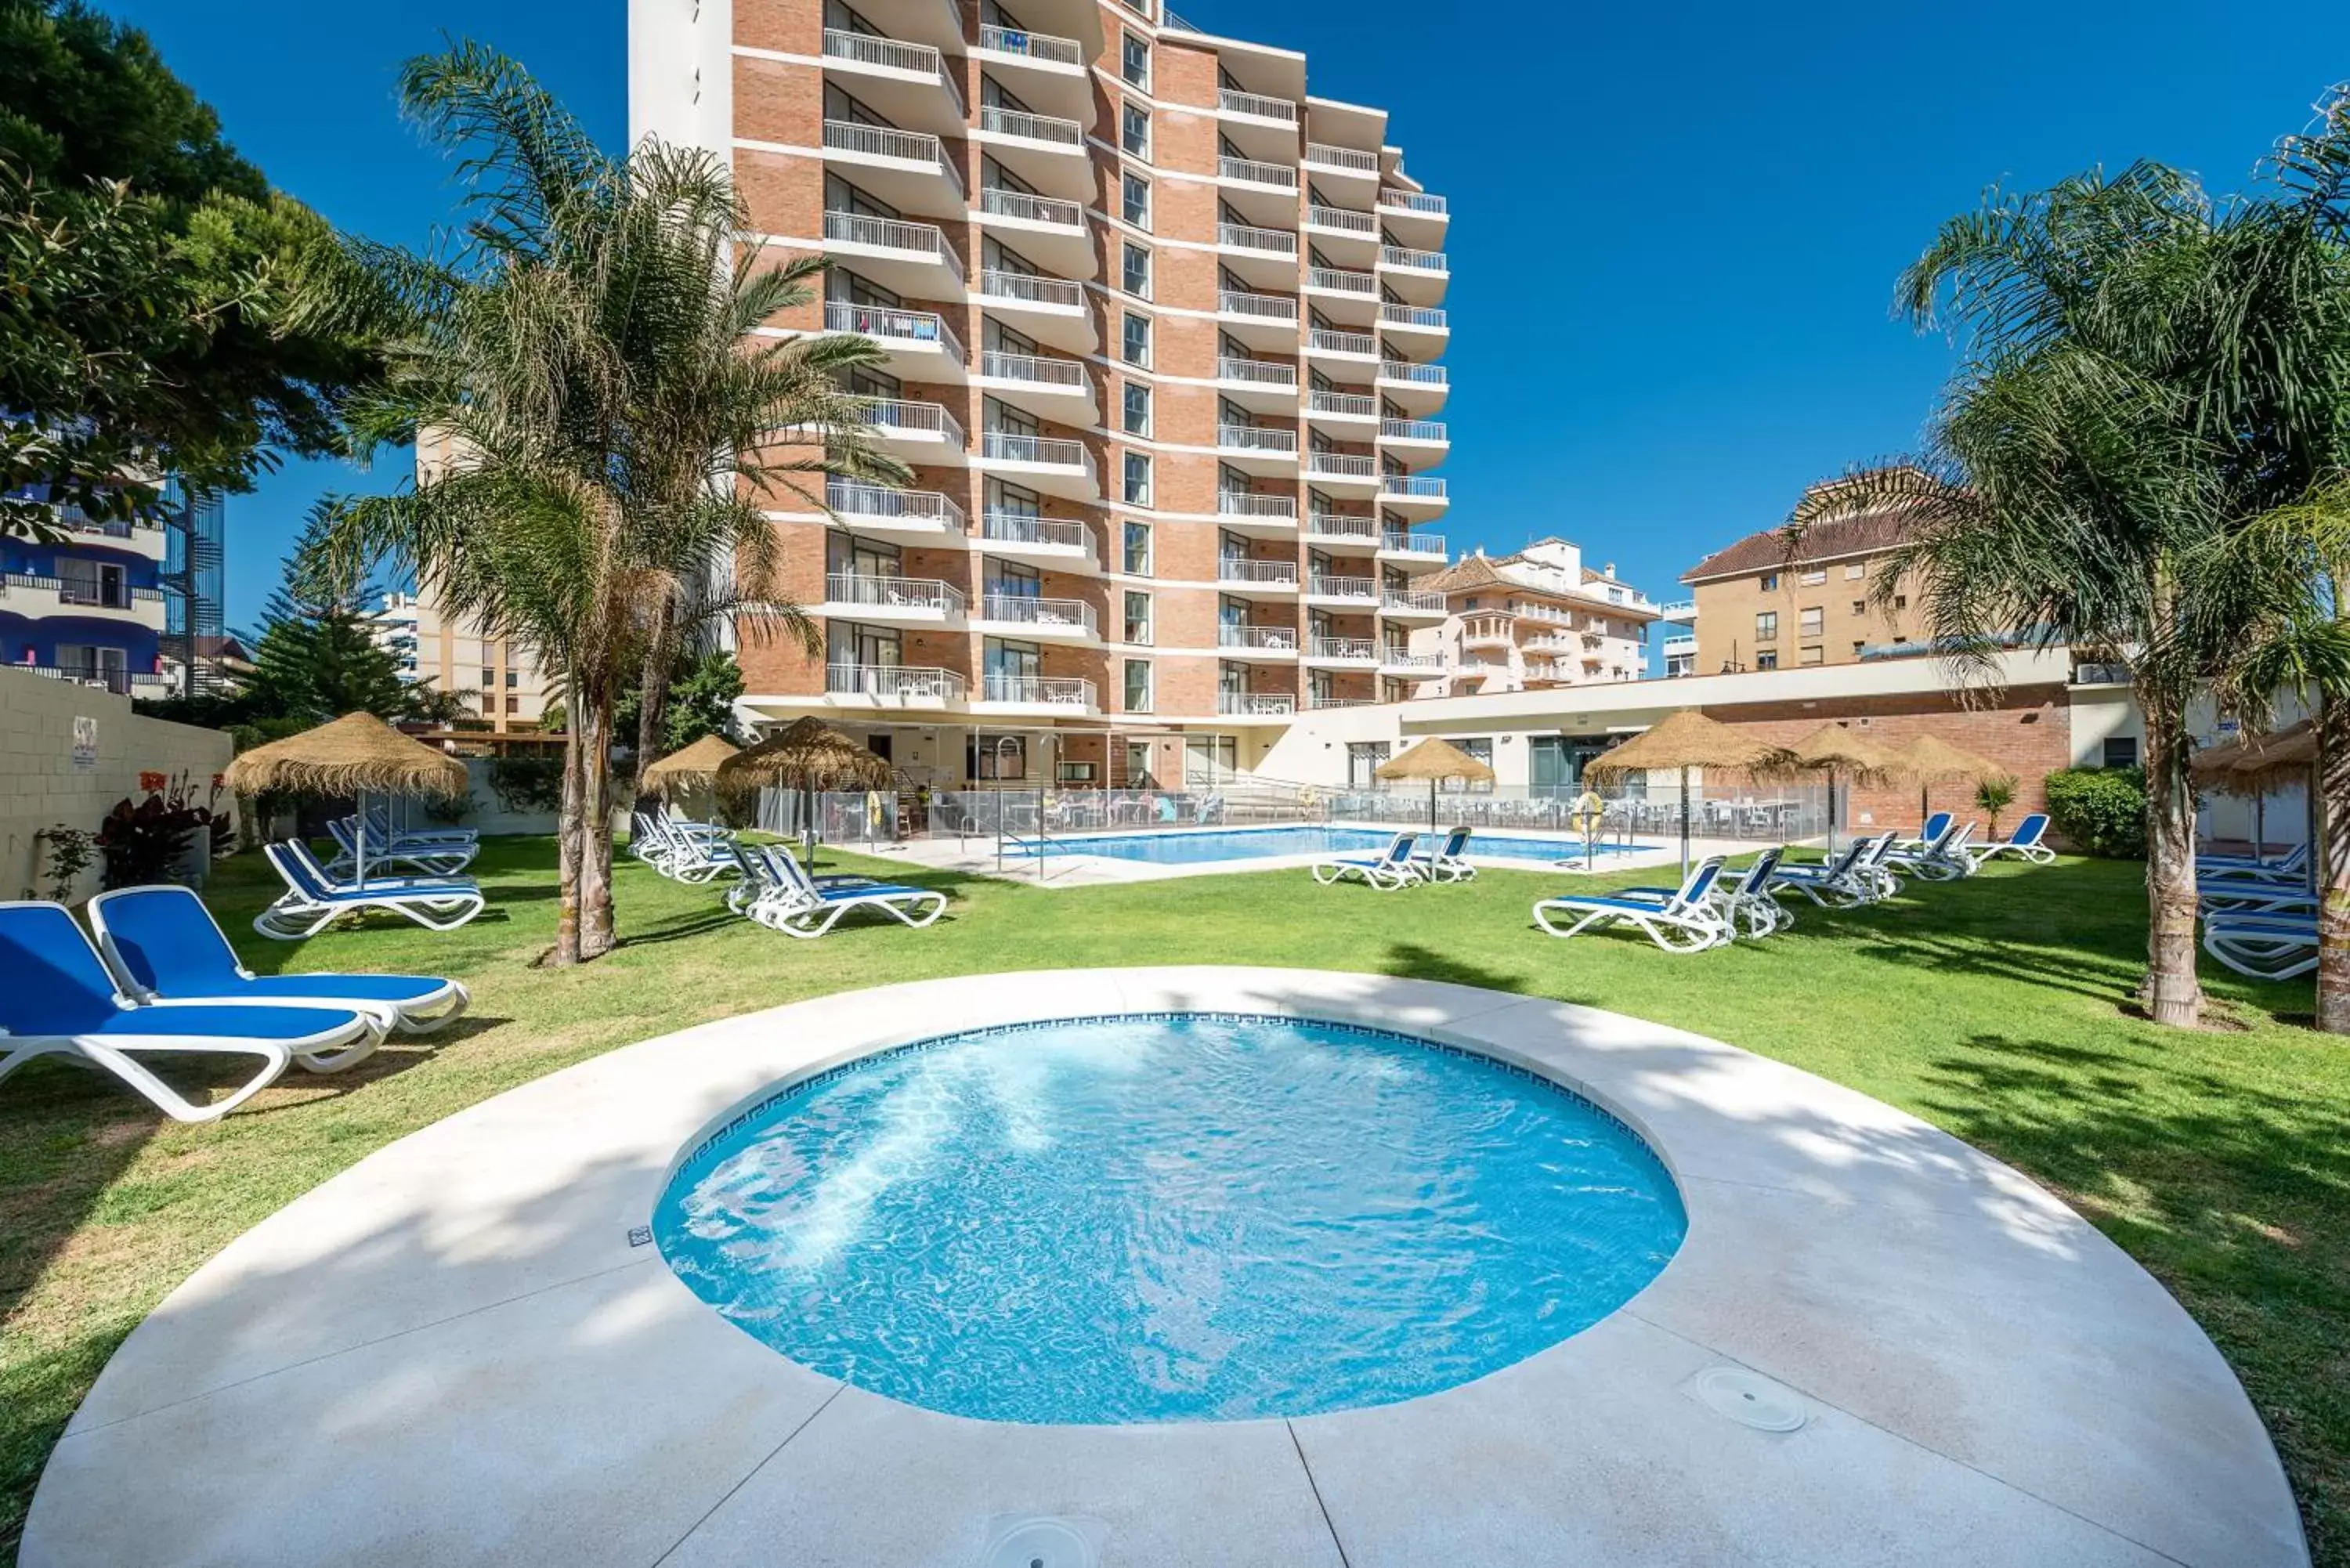 Swimming pool in Hotel Mainare Playa